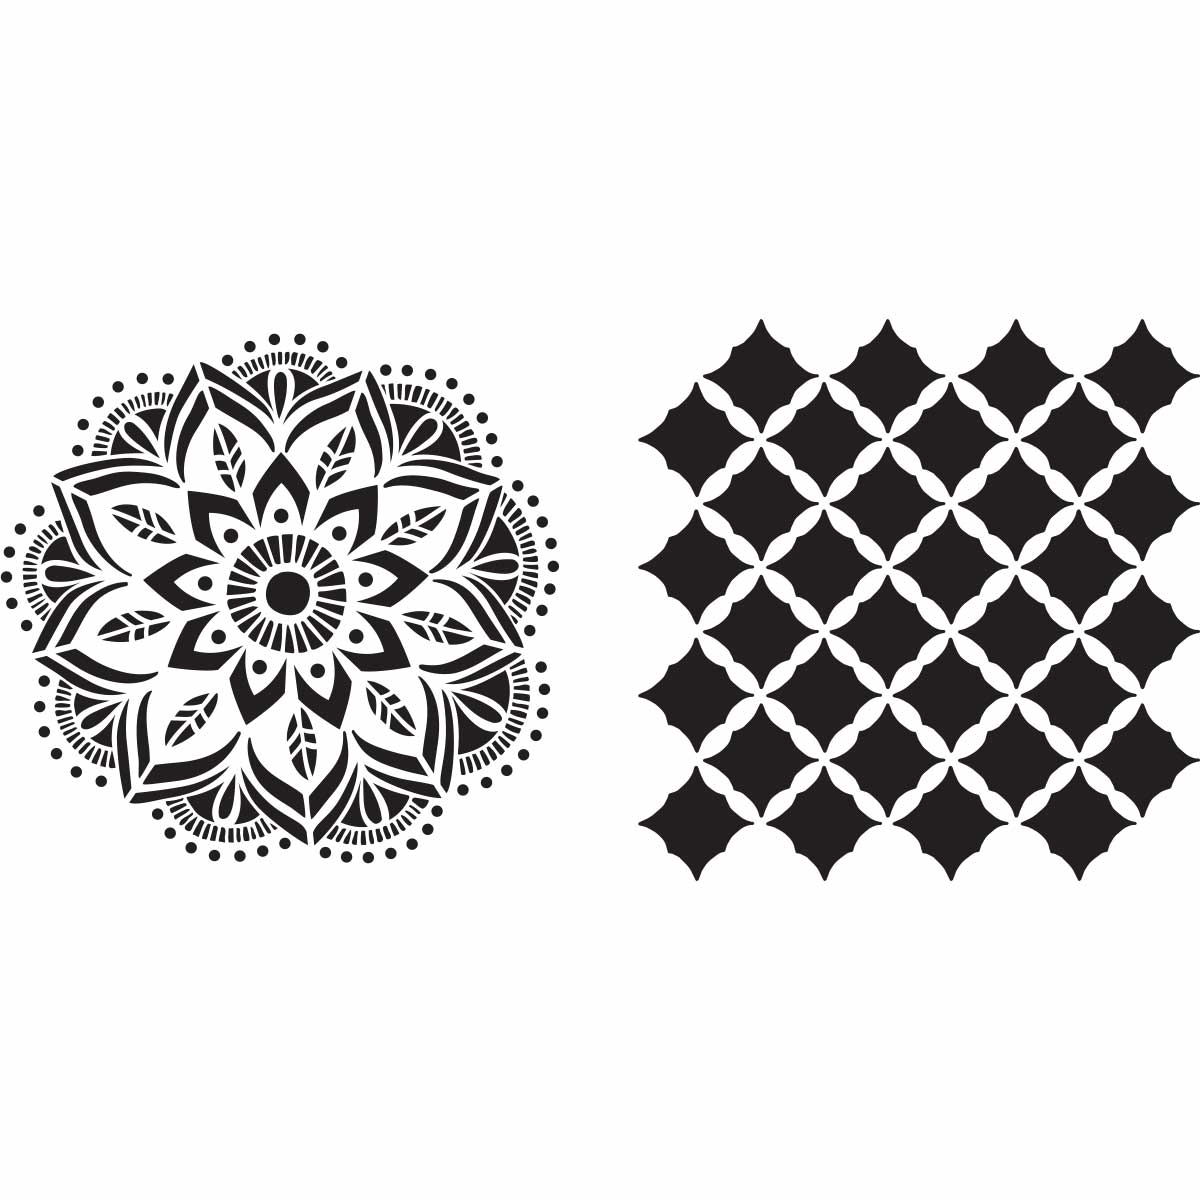 Fabric Creations™ Adhesive Stencils - Mandala, 6